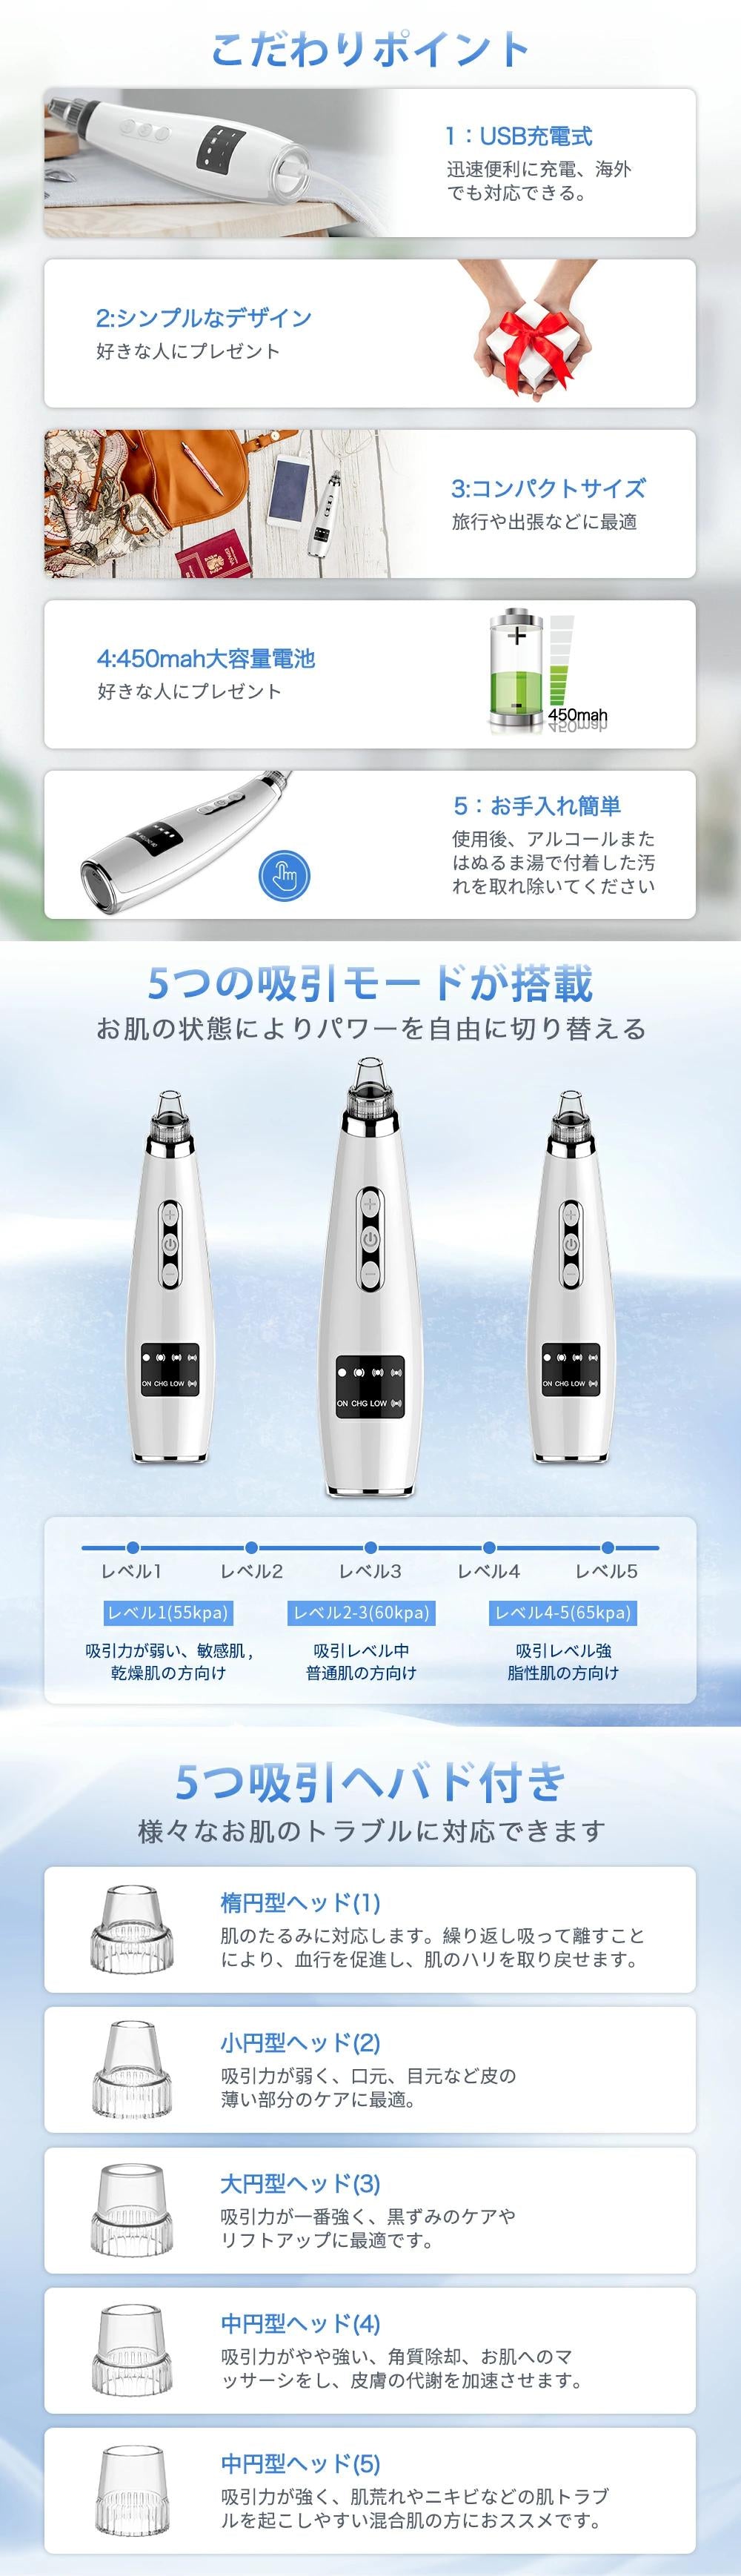 YAPAFA 最新版 毛穴吸引器 美顔器 5種類の吸引ノズル 5段階吸引力